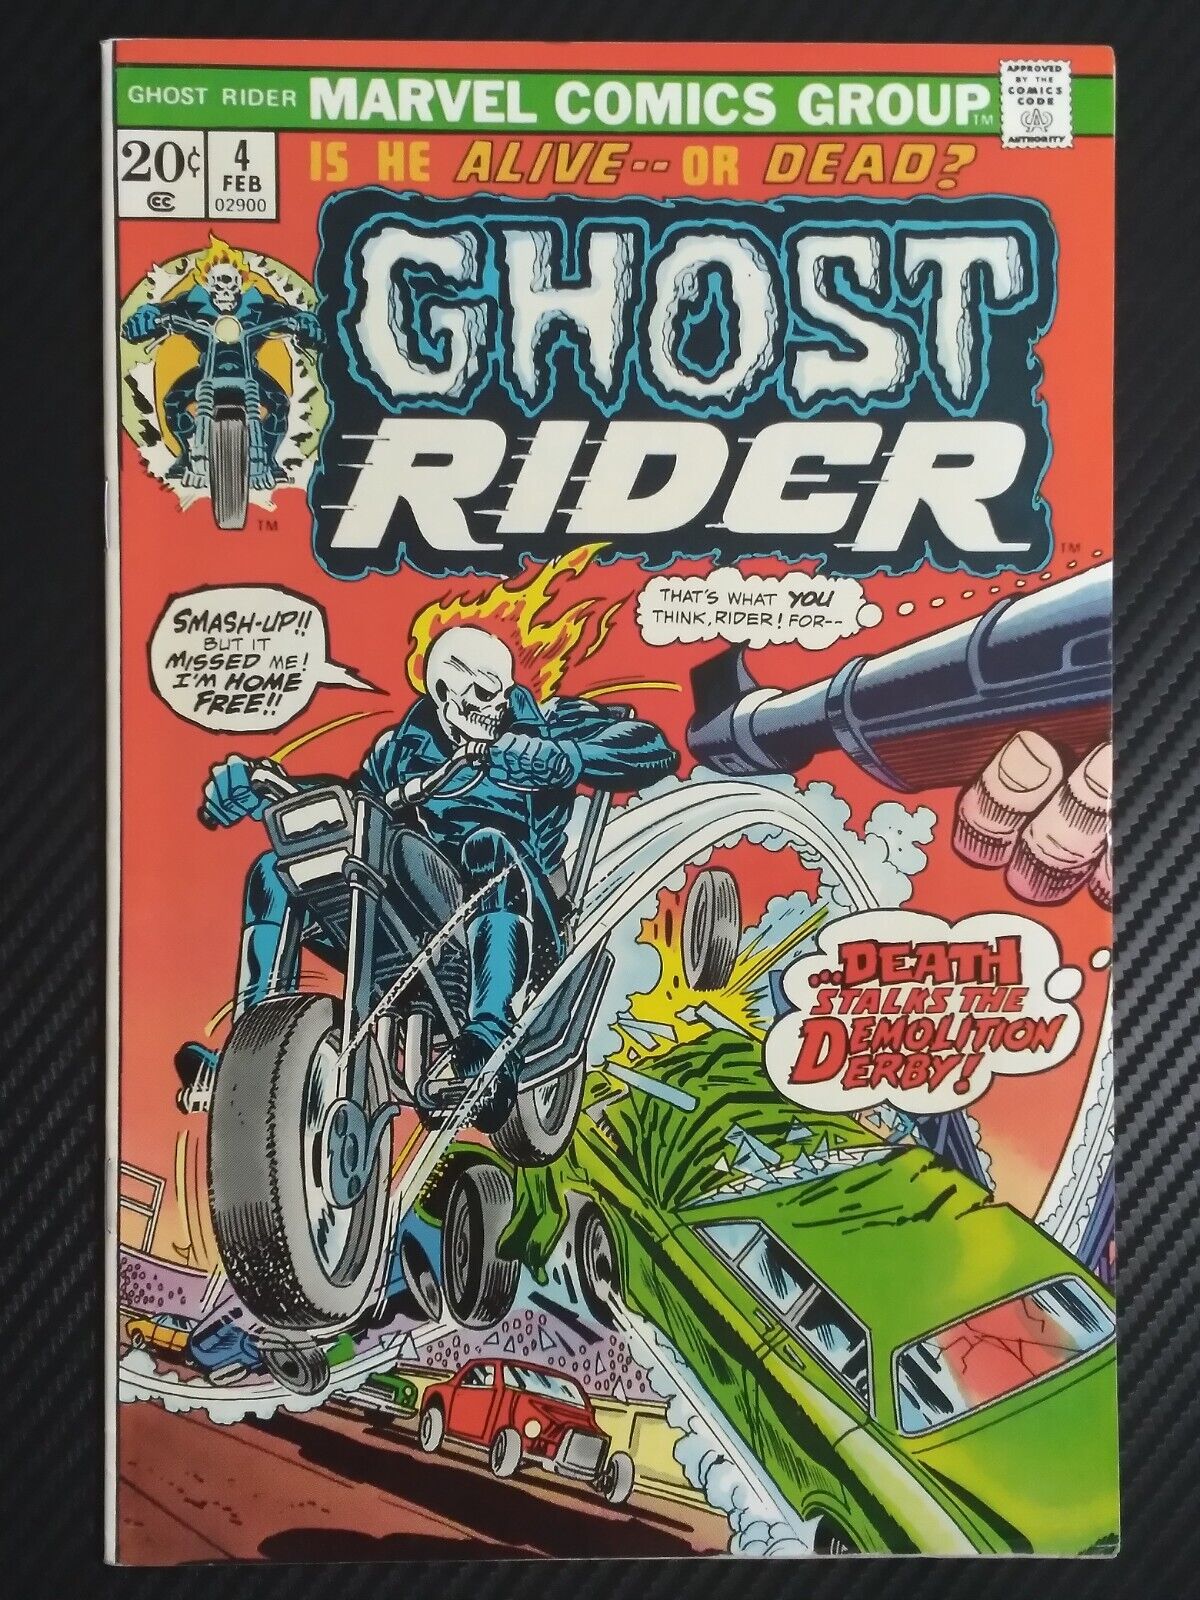 1973 Ghost Rider Marvel Comic Book #4 